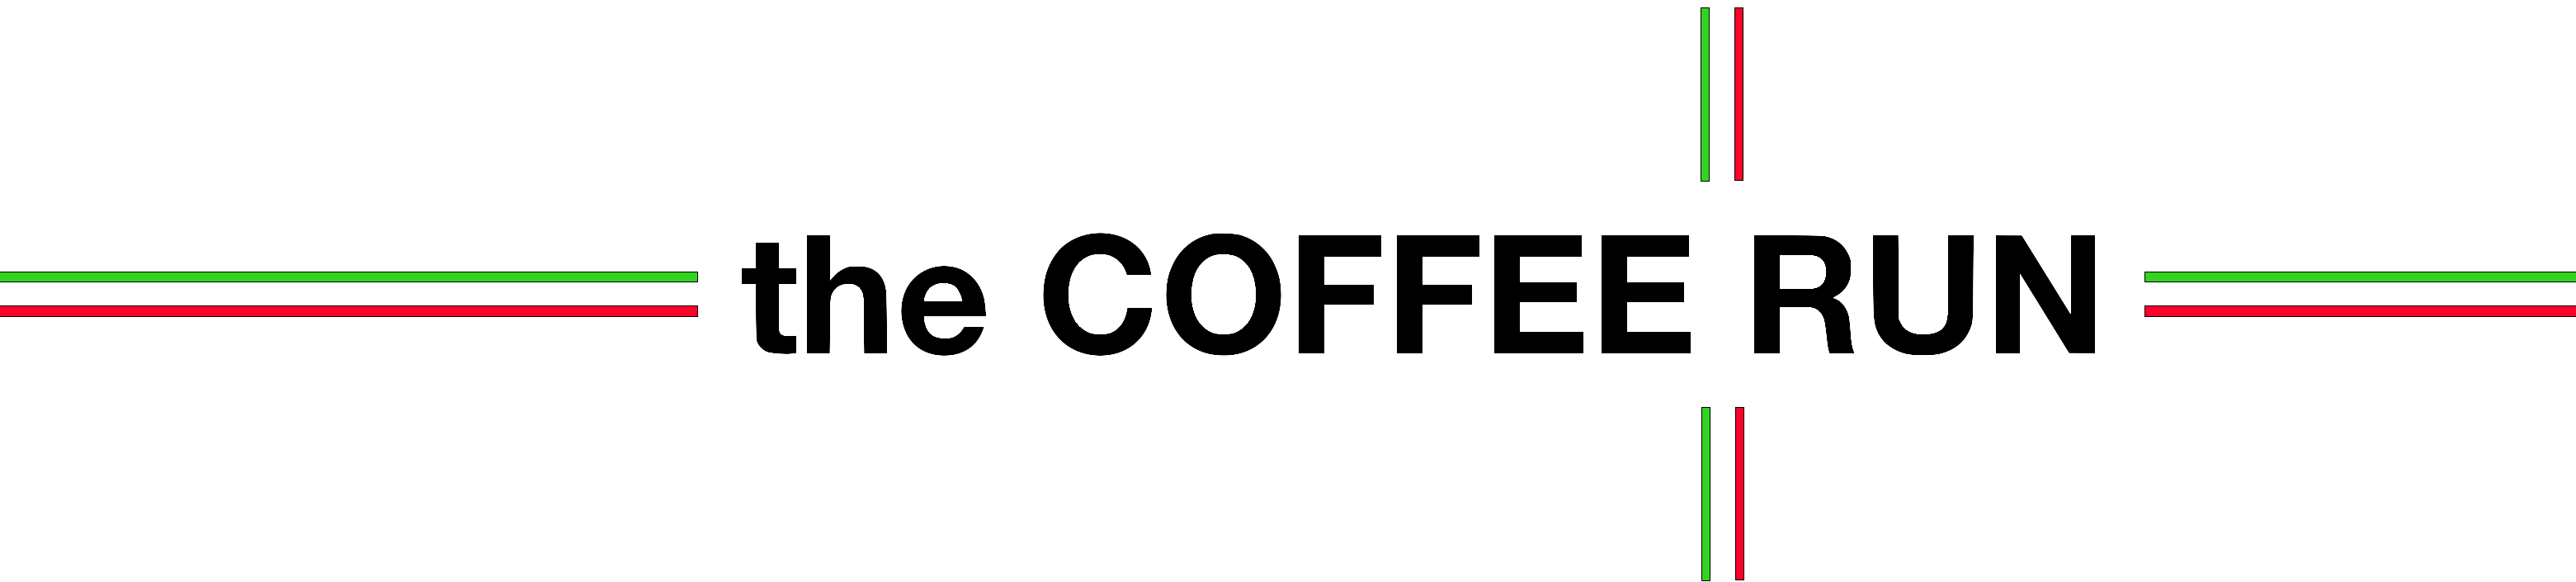 TheCoffeeRun logo header black